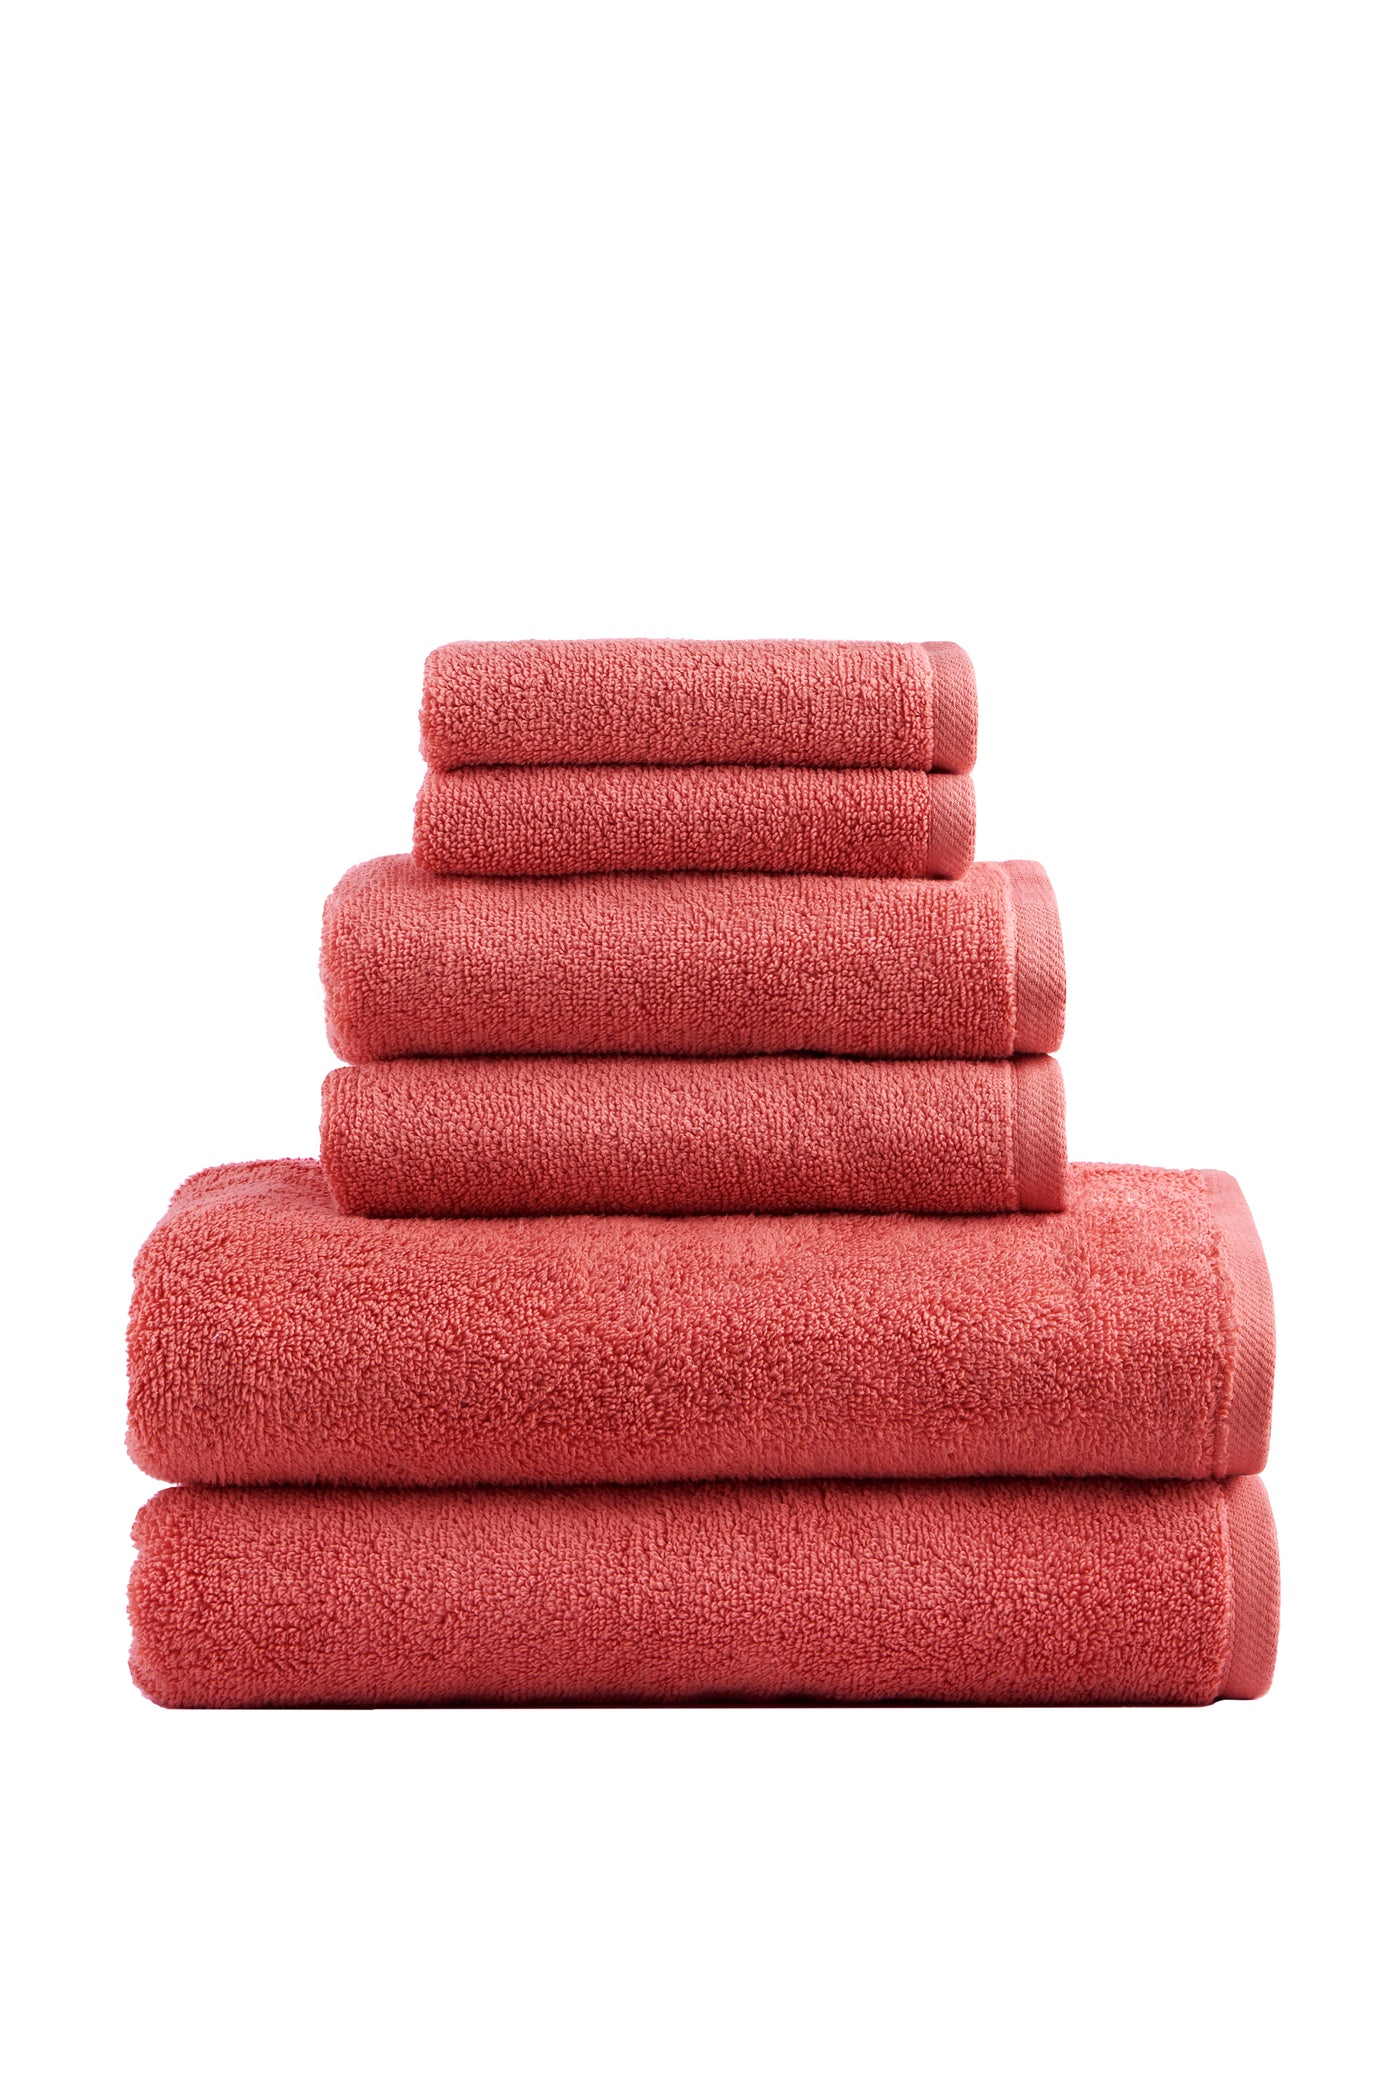 Luxury Ultra Soft Towel - 6pc Set - 2 x Bath _ 2 x Hand _ 2 x Face _ Brick